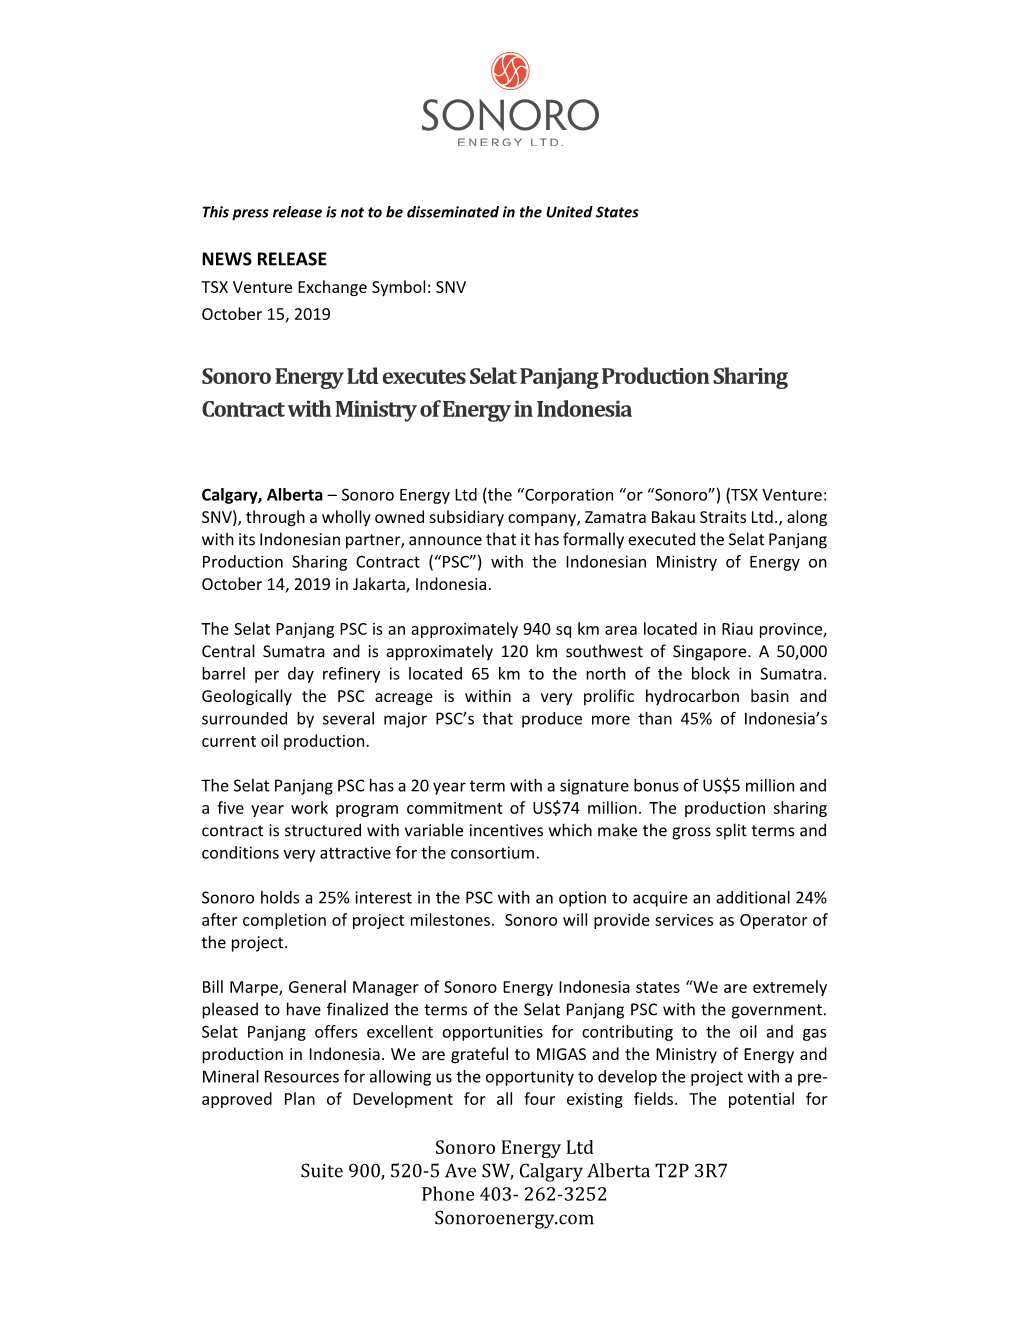 Oct. 15, 2019: Sonoro Energy Executes Selat Panjang Production